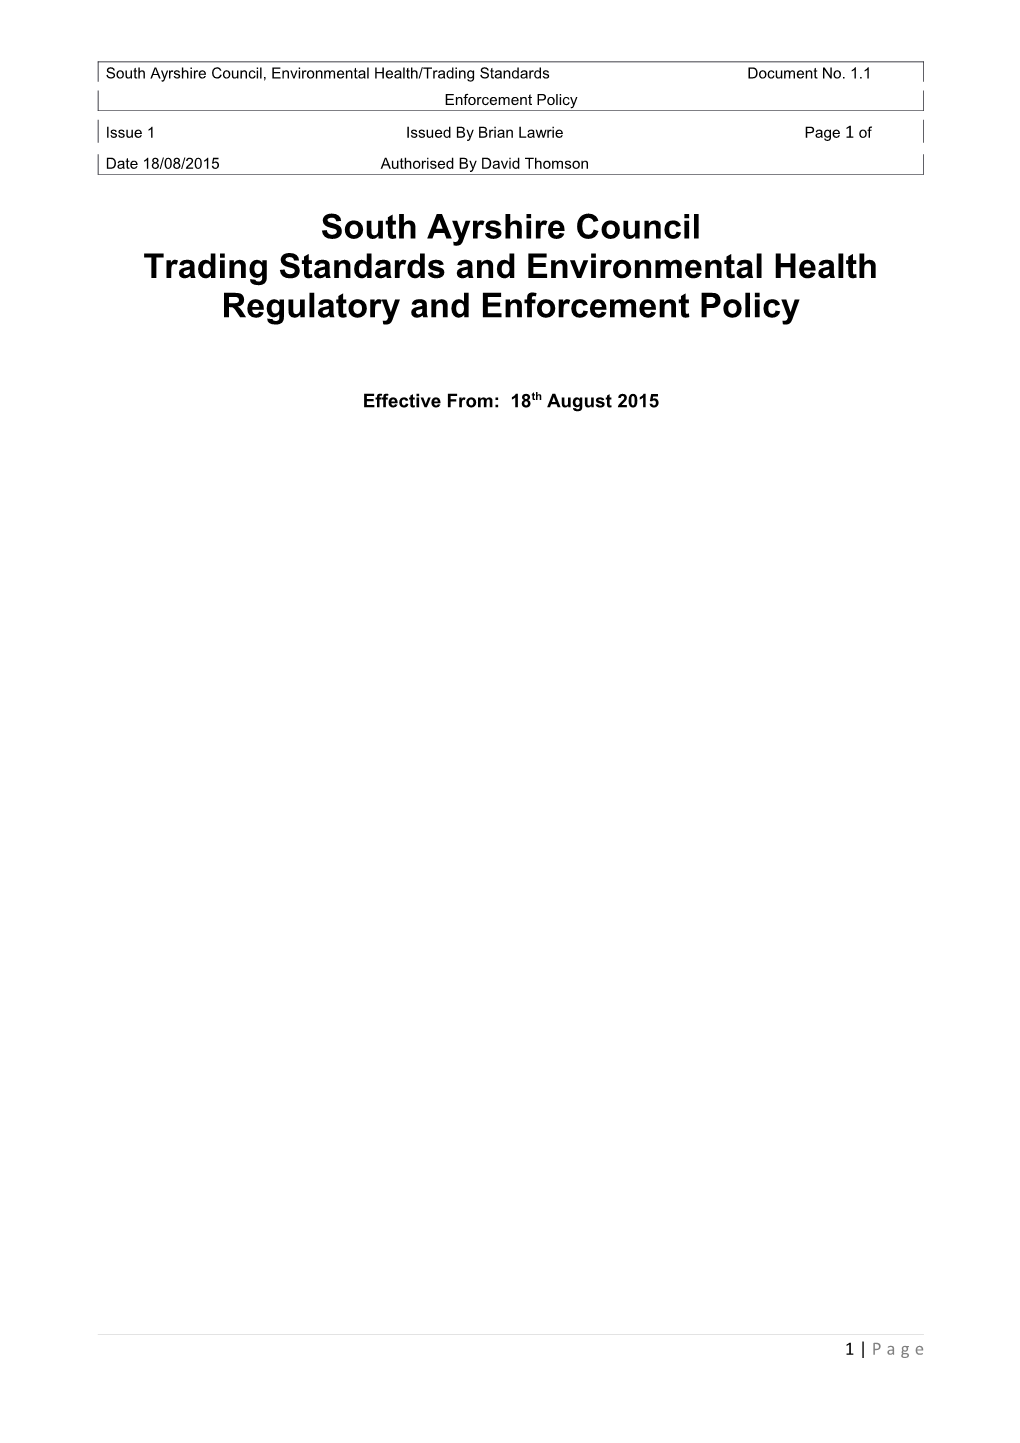 South Ayrshire Council, Environmental Health/Trading Standardsdocument No. 1.1